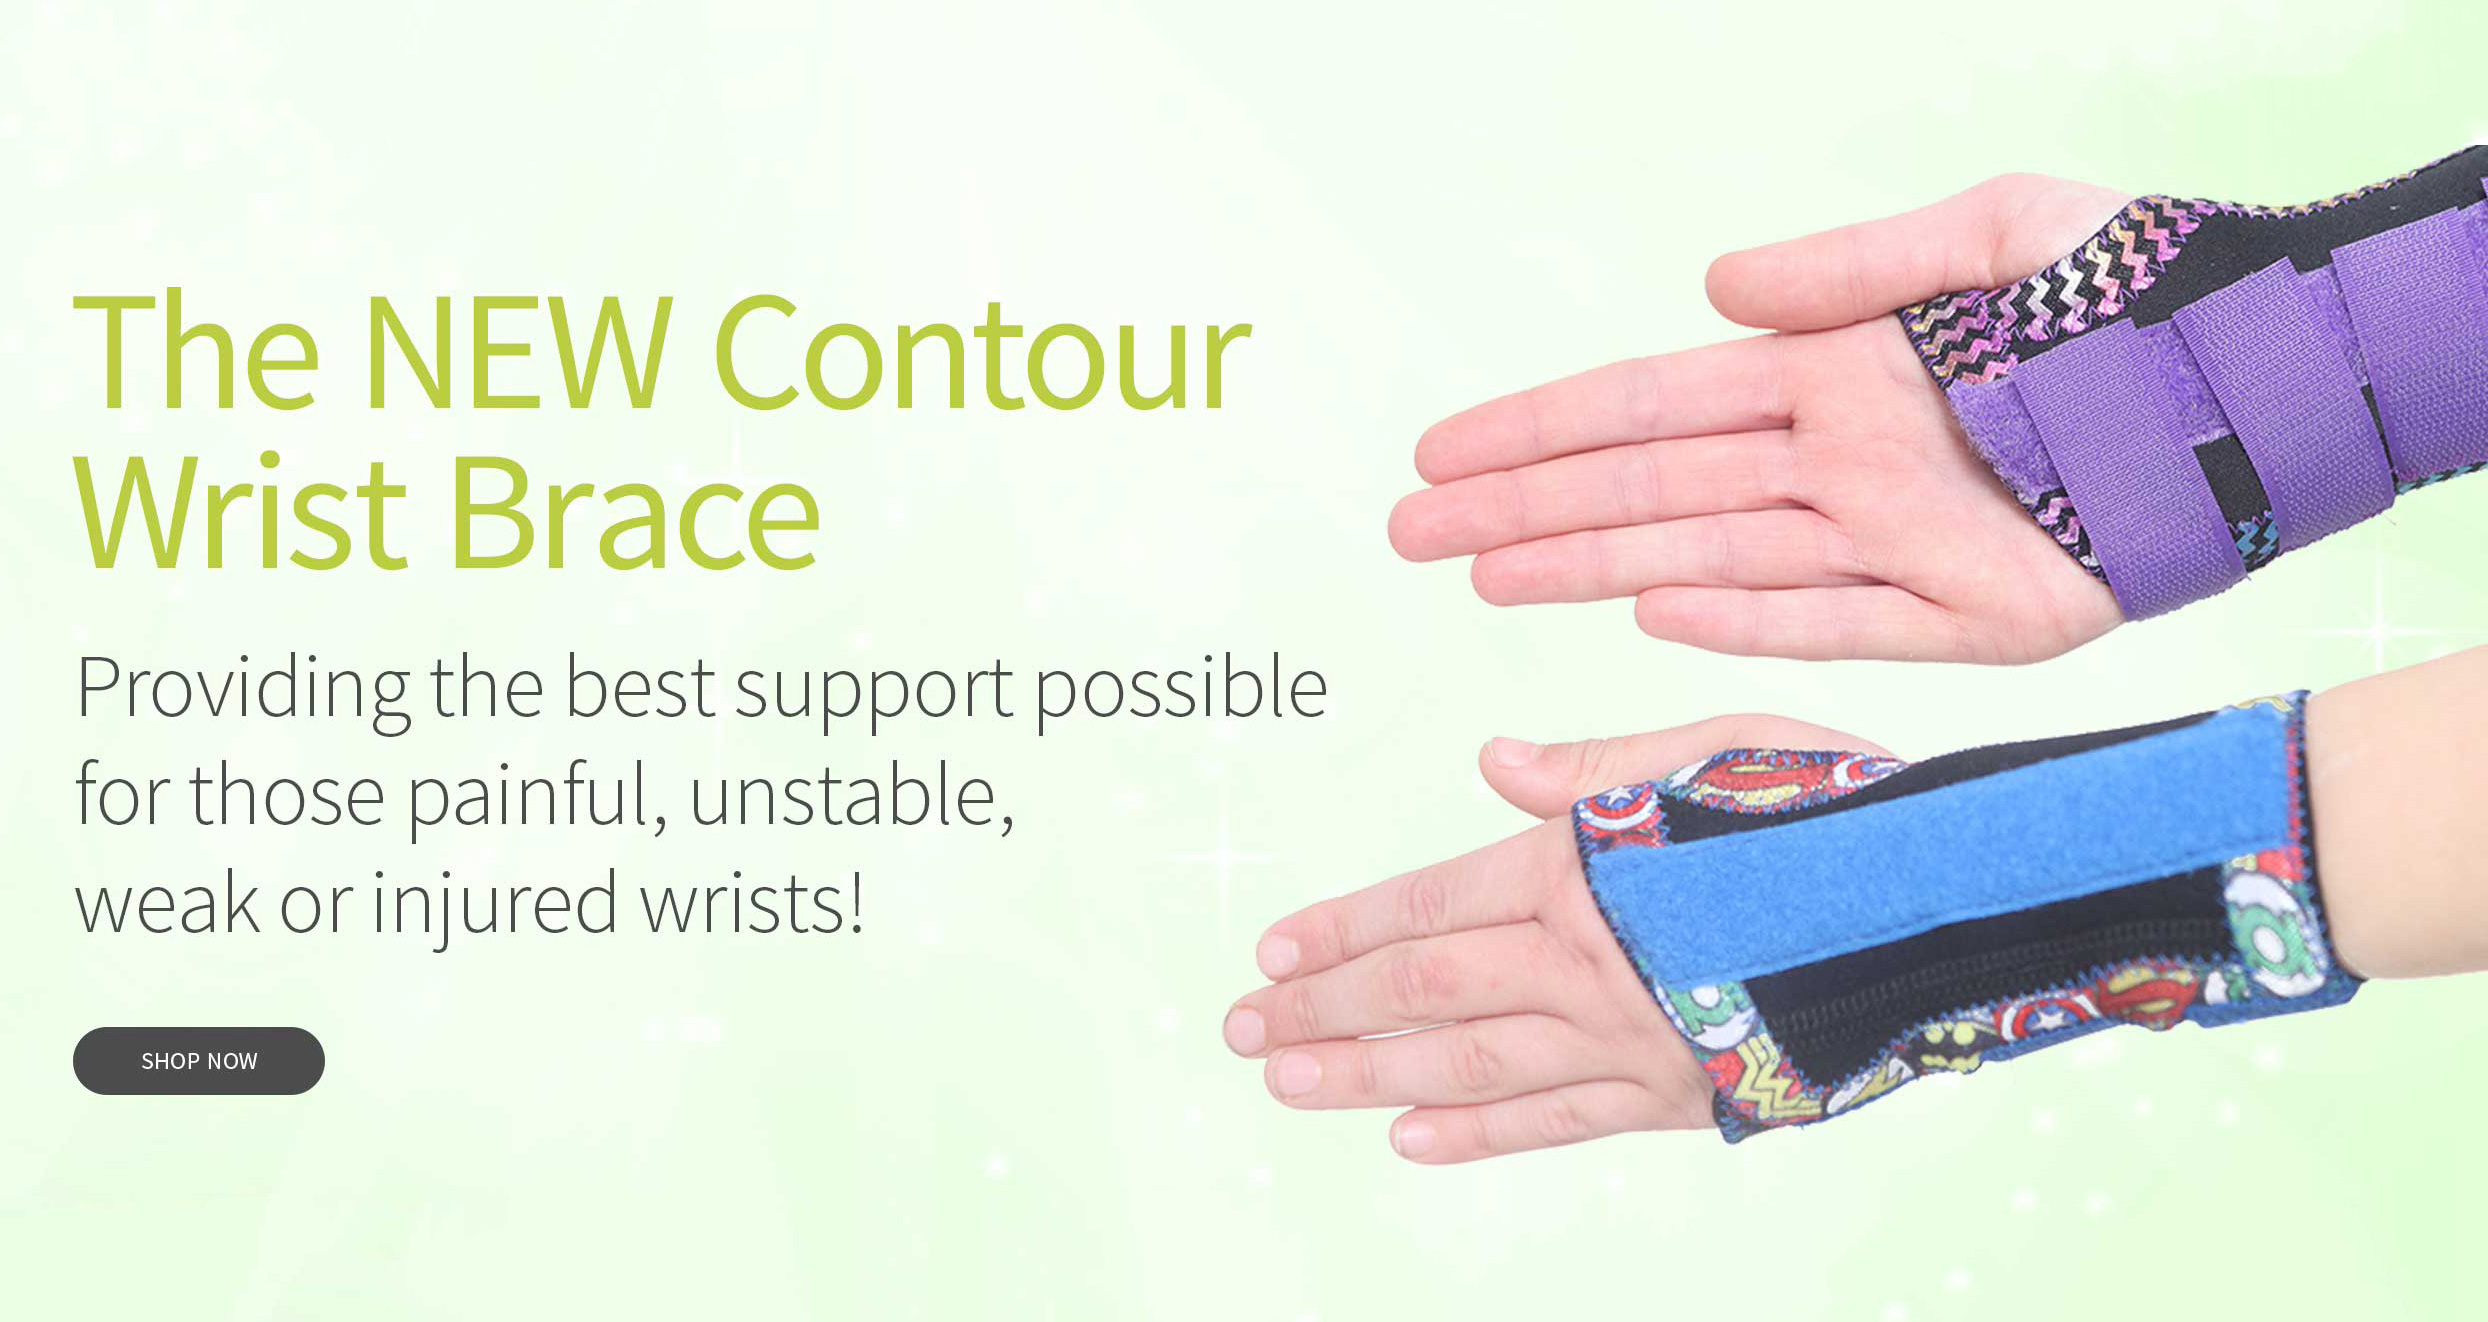 Introducing the new Contour Wrist Brace